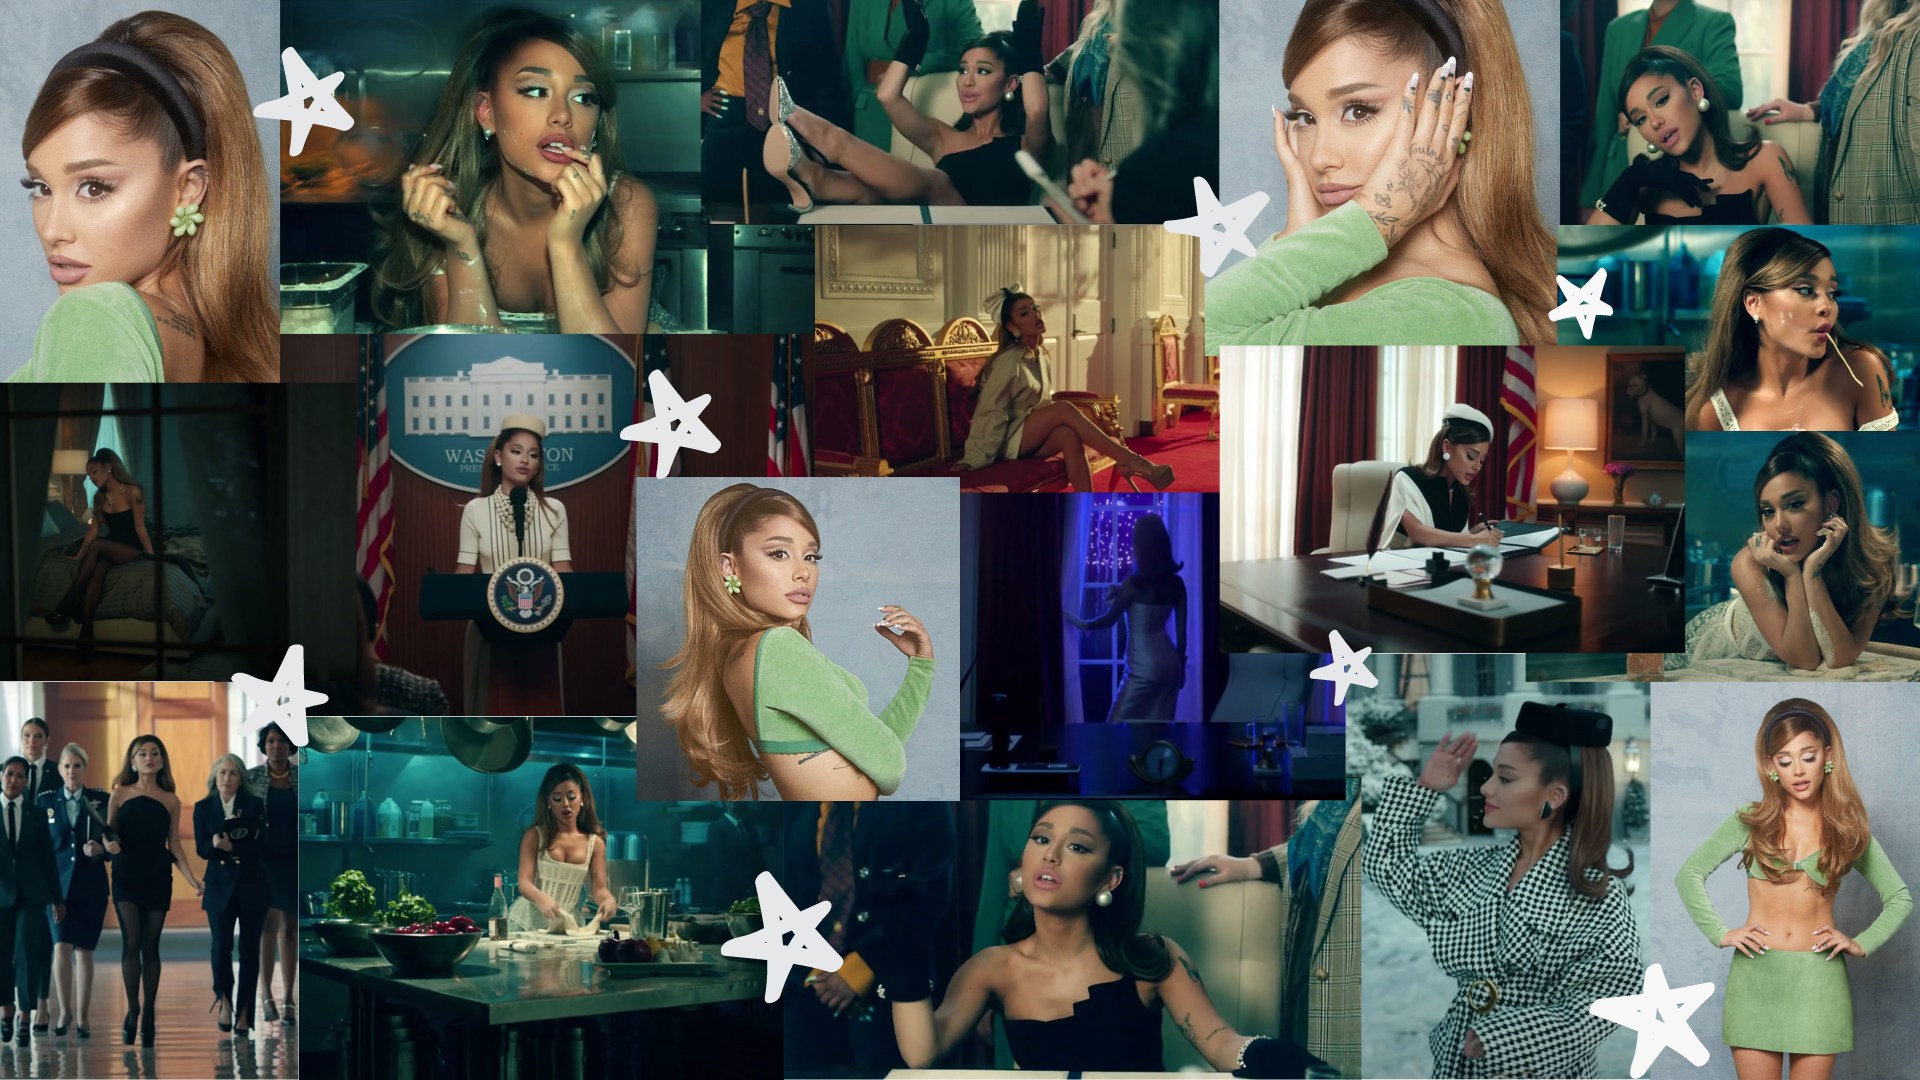 Positions Ariana Grande desktop wallpaper. Ariana grande wallpaper, Ariana grande background, Ariana grande concert